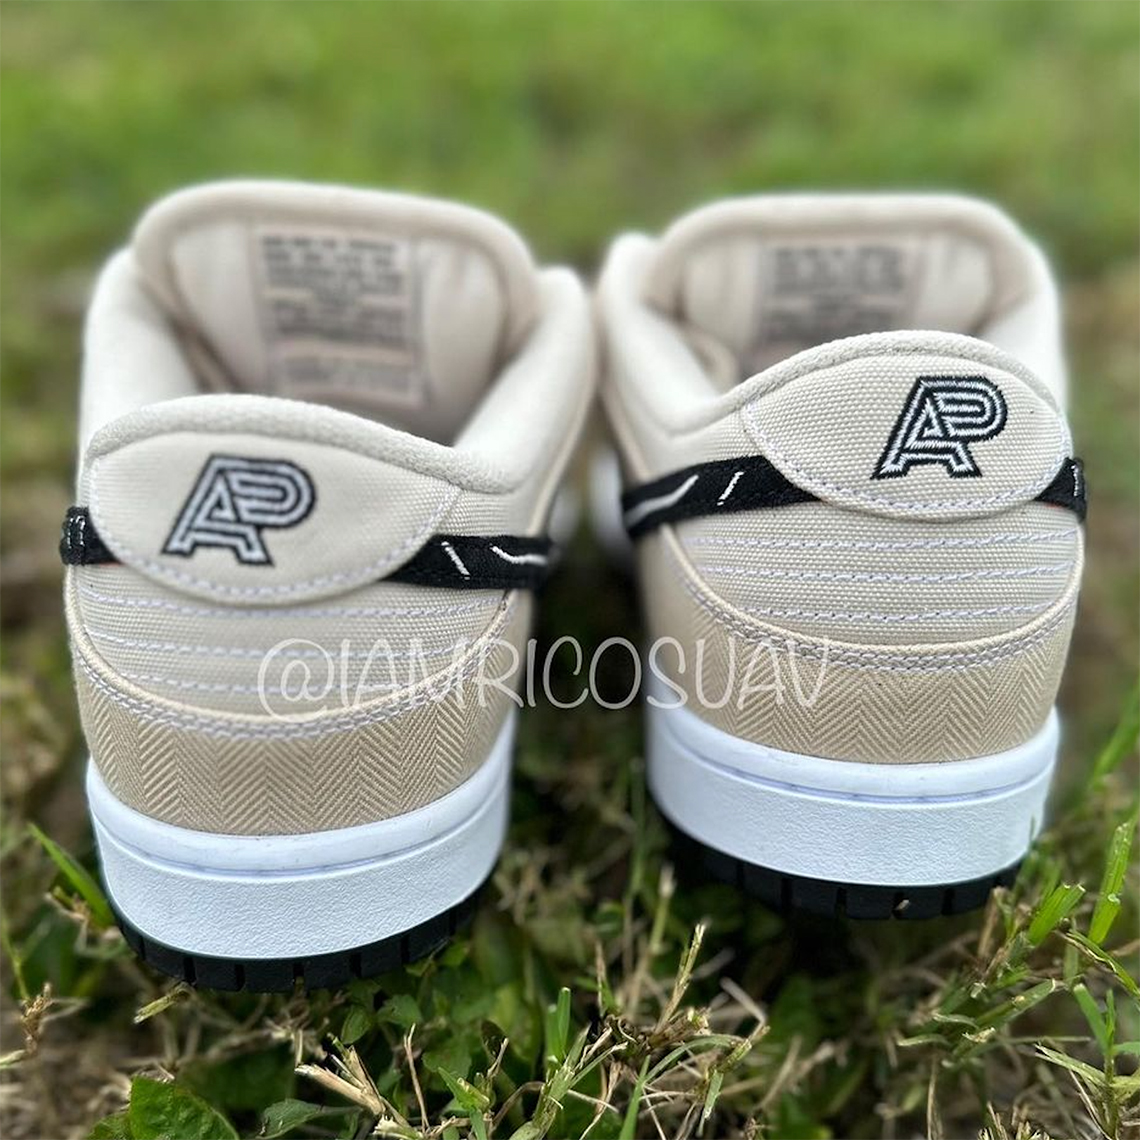 Albino u0026 Preto x Nike SB Dunk Low Jiu Jitsu Release | Sneaker News